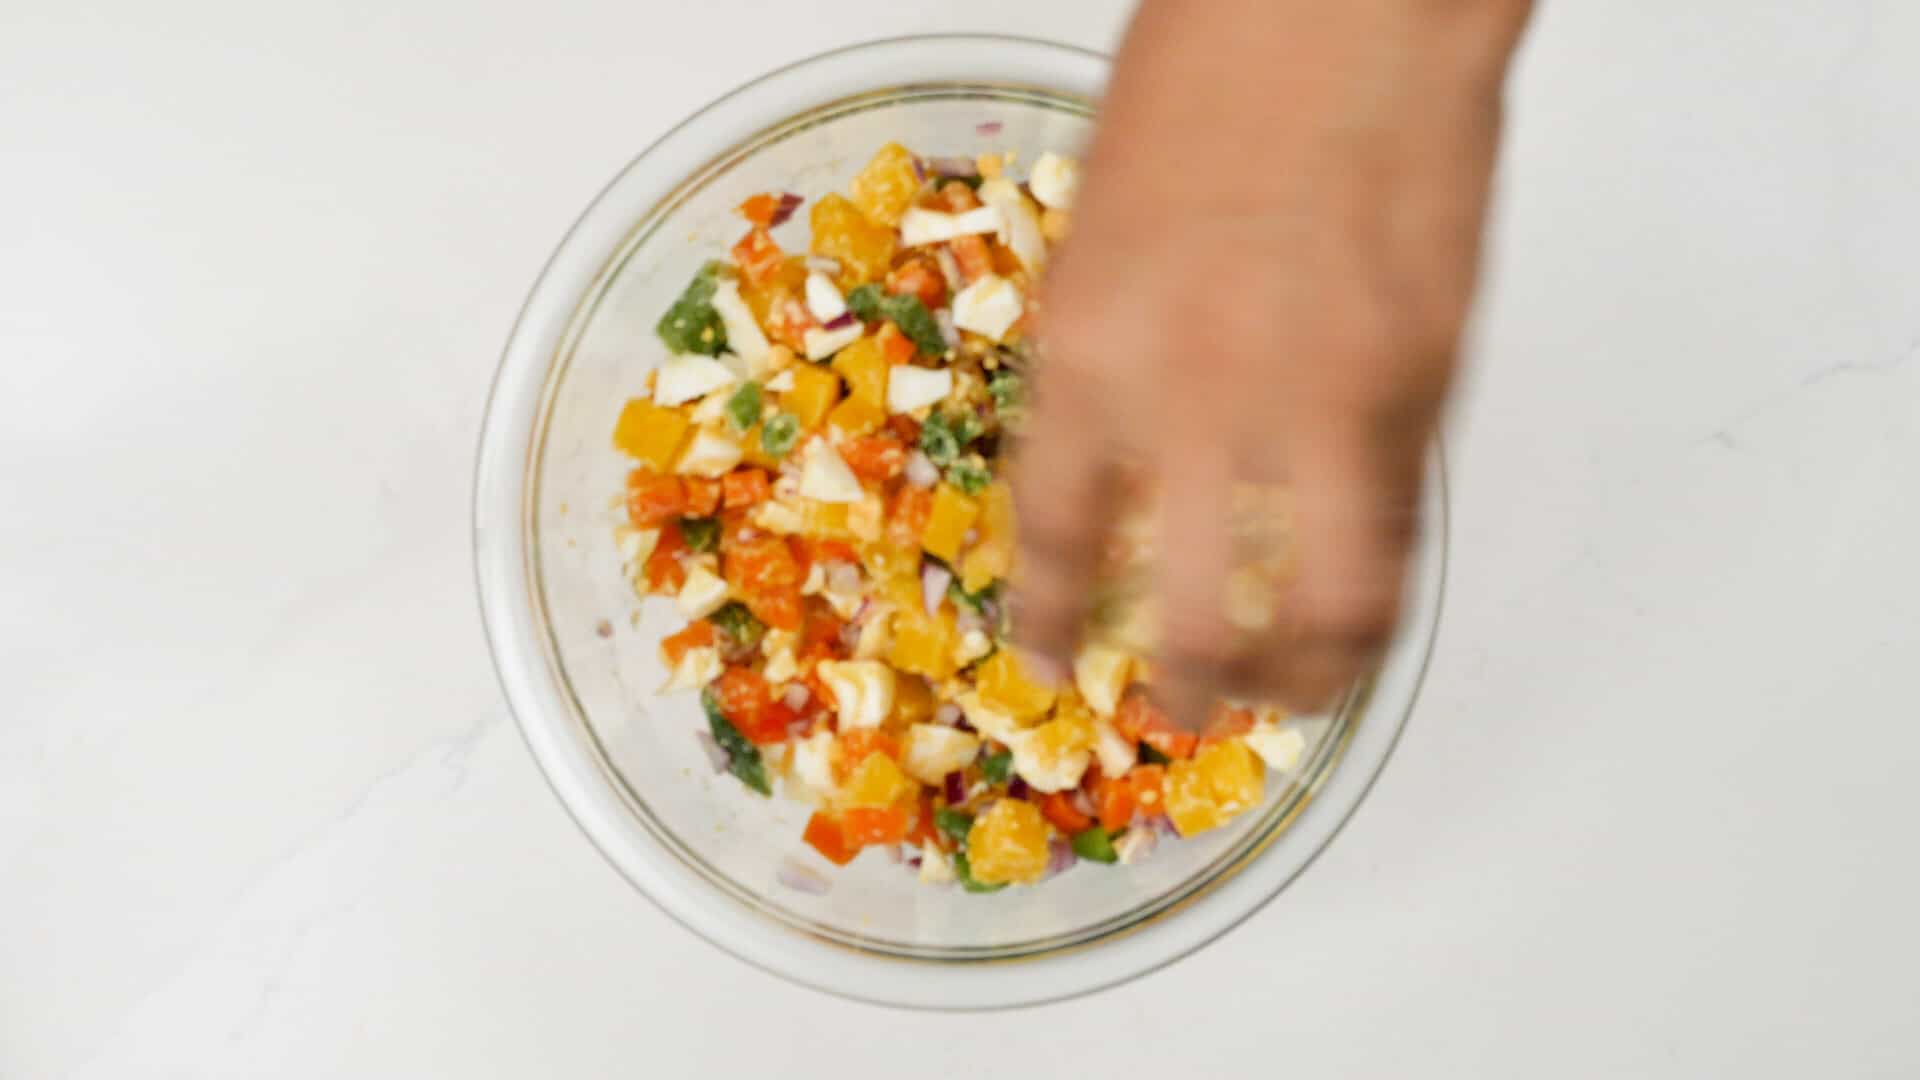 Mixing salad ingredients.